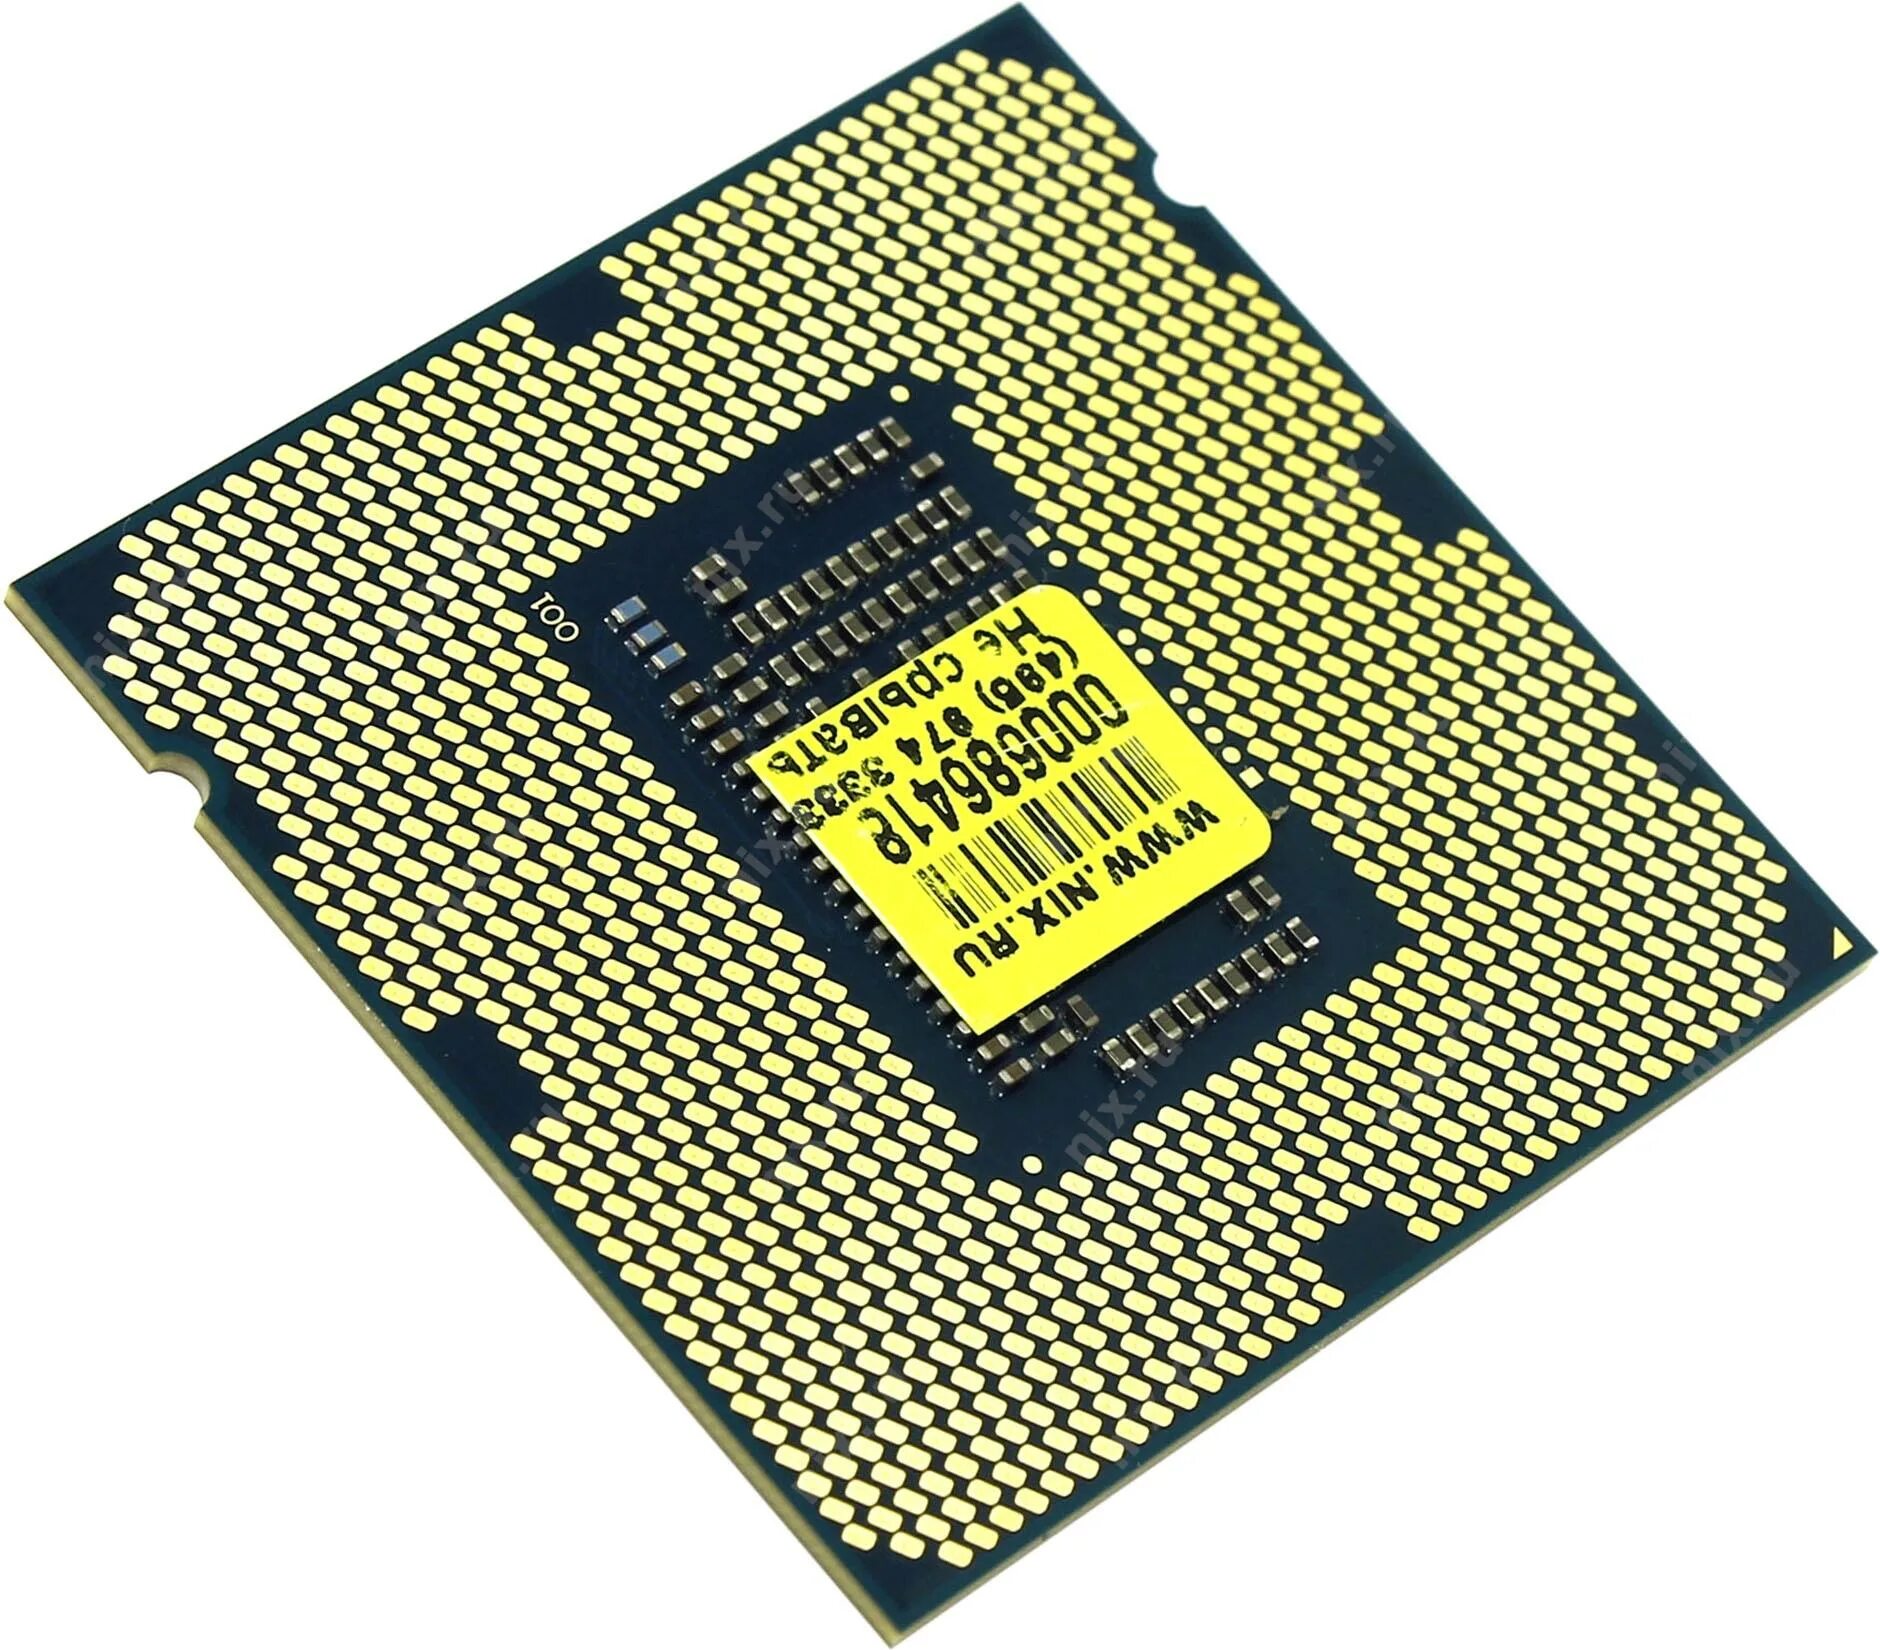 Intel i5 3570. Core i5 3570. Процессор Intel Core i5-3570s Ivy Bridge. 3570 сокет